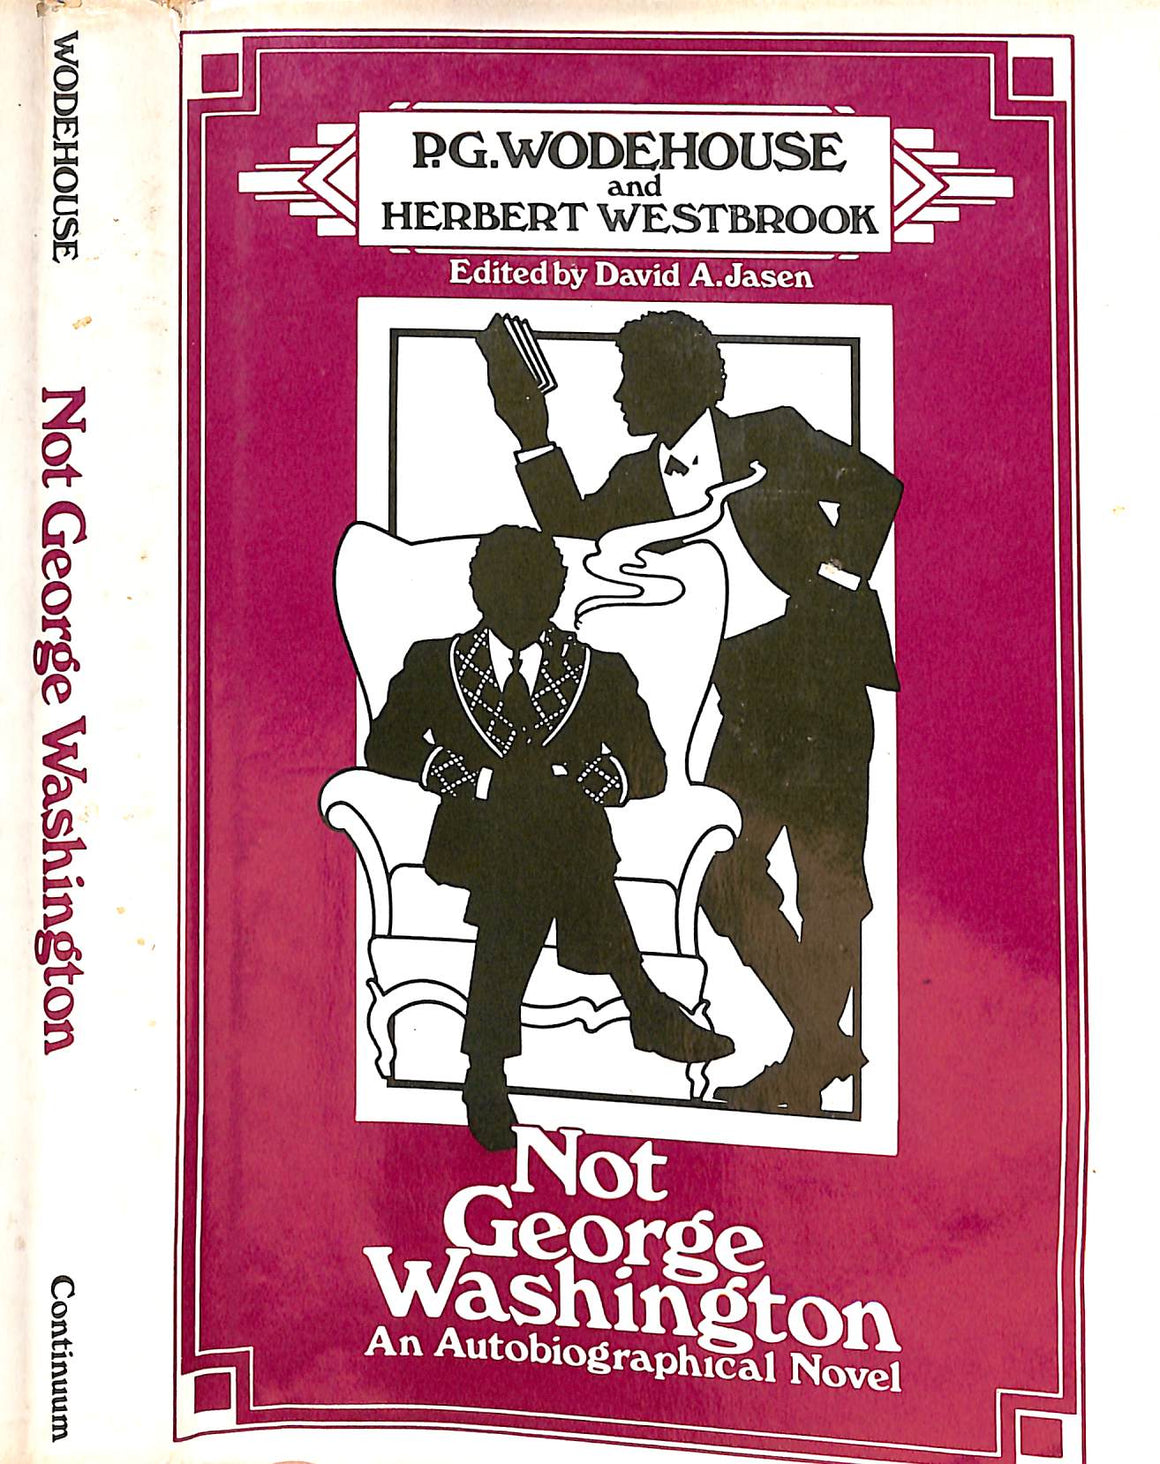 "Not George Washington An Autobiographical Novel" 1980 WODEHOUSE, P.G.